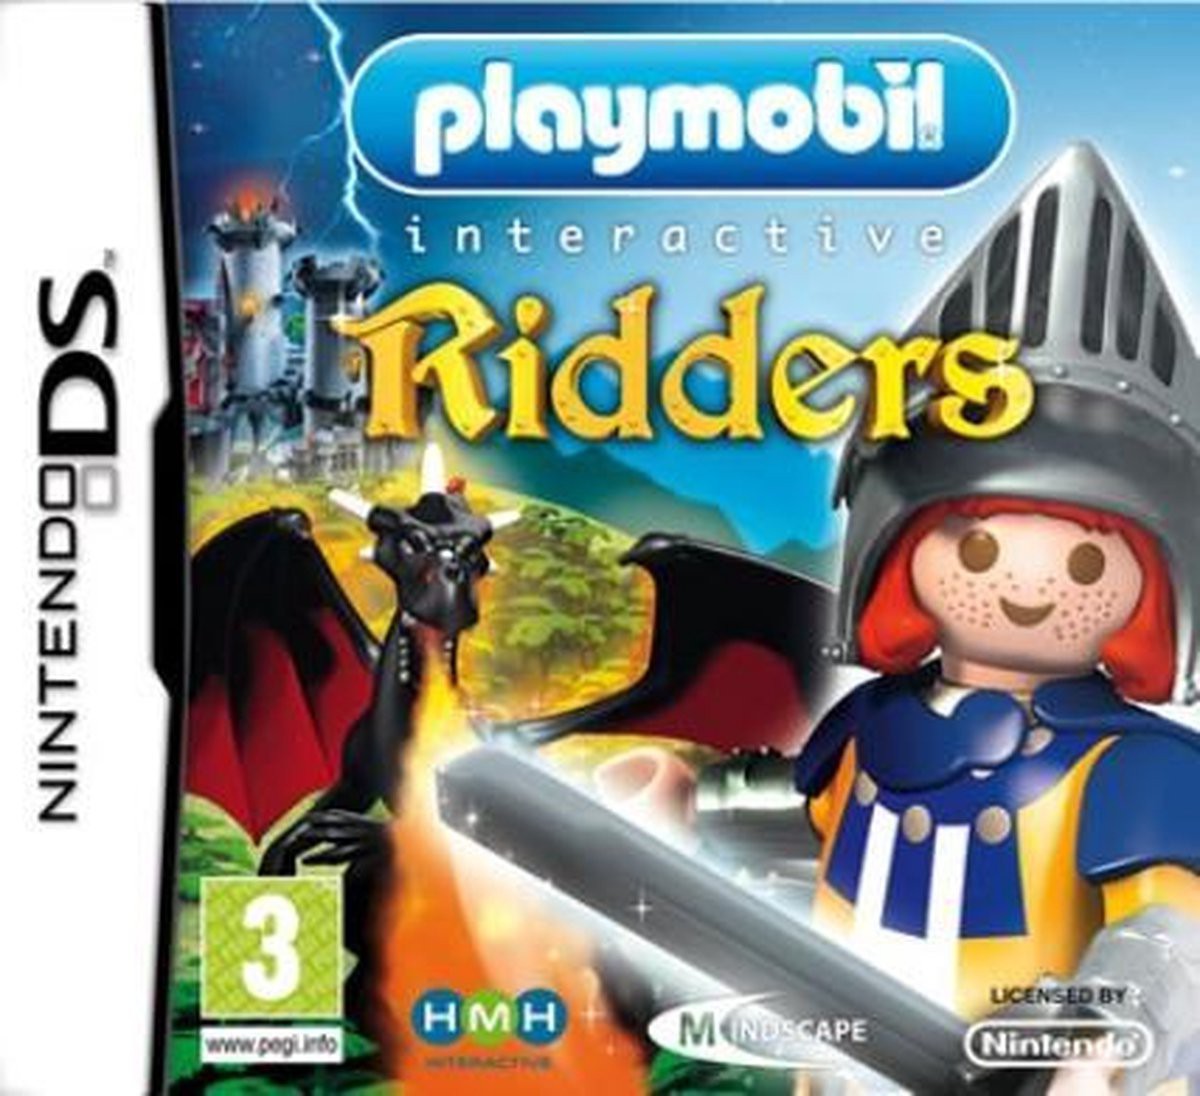 Ridders - Playmobil Interactive - Nintendo DS Games